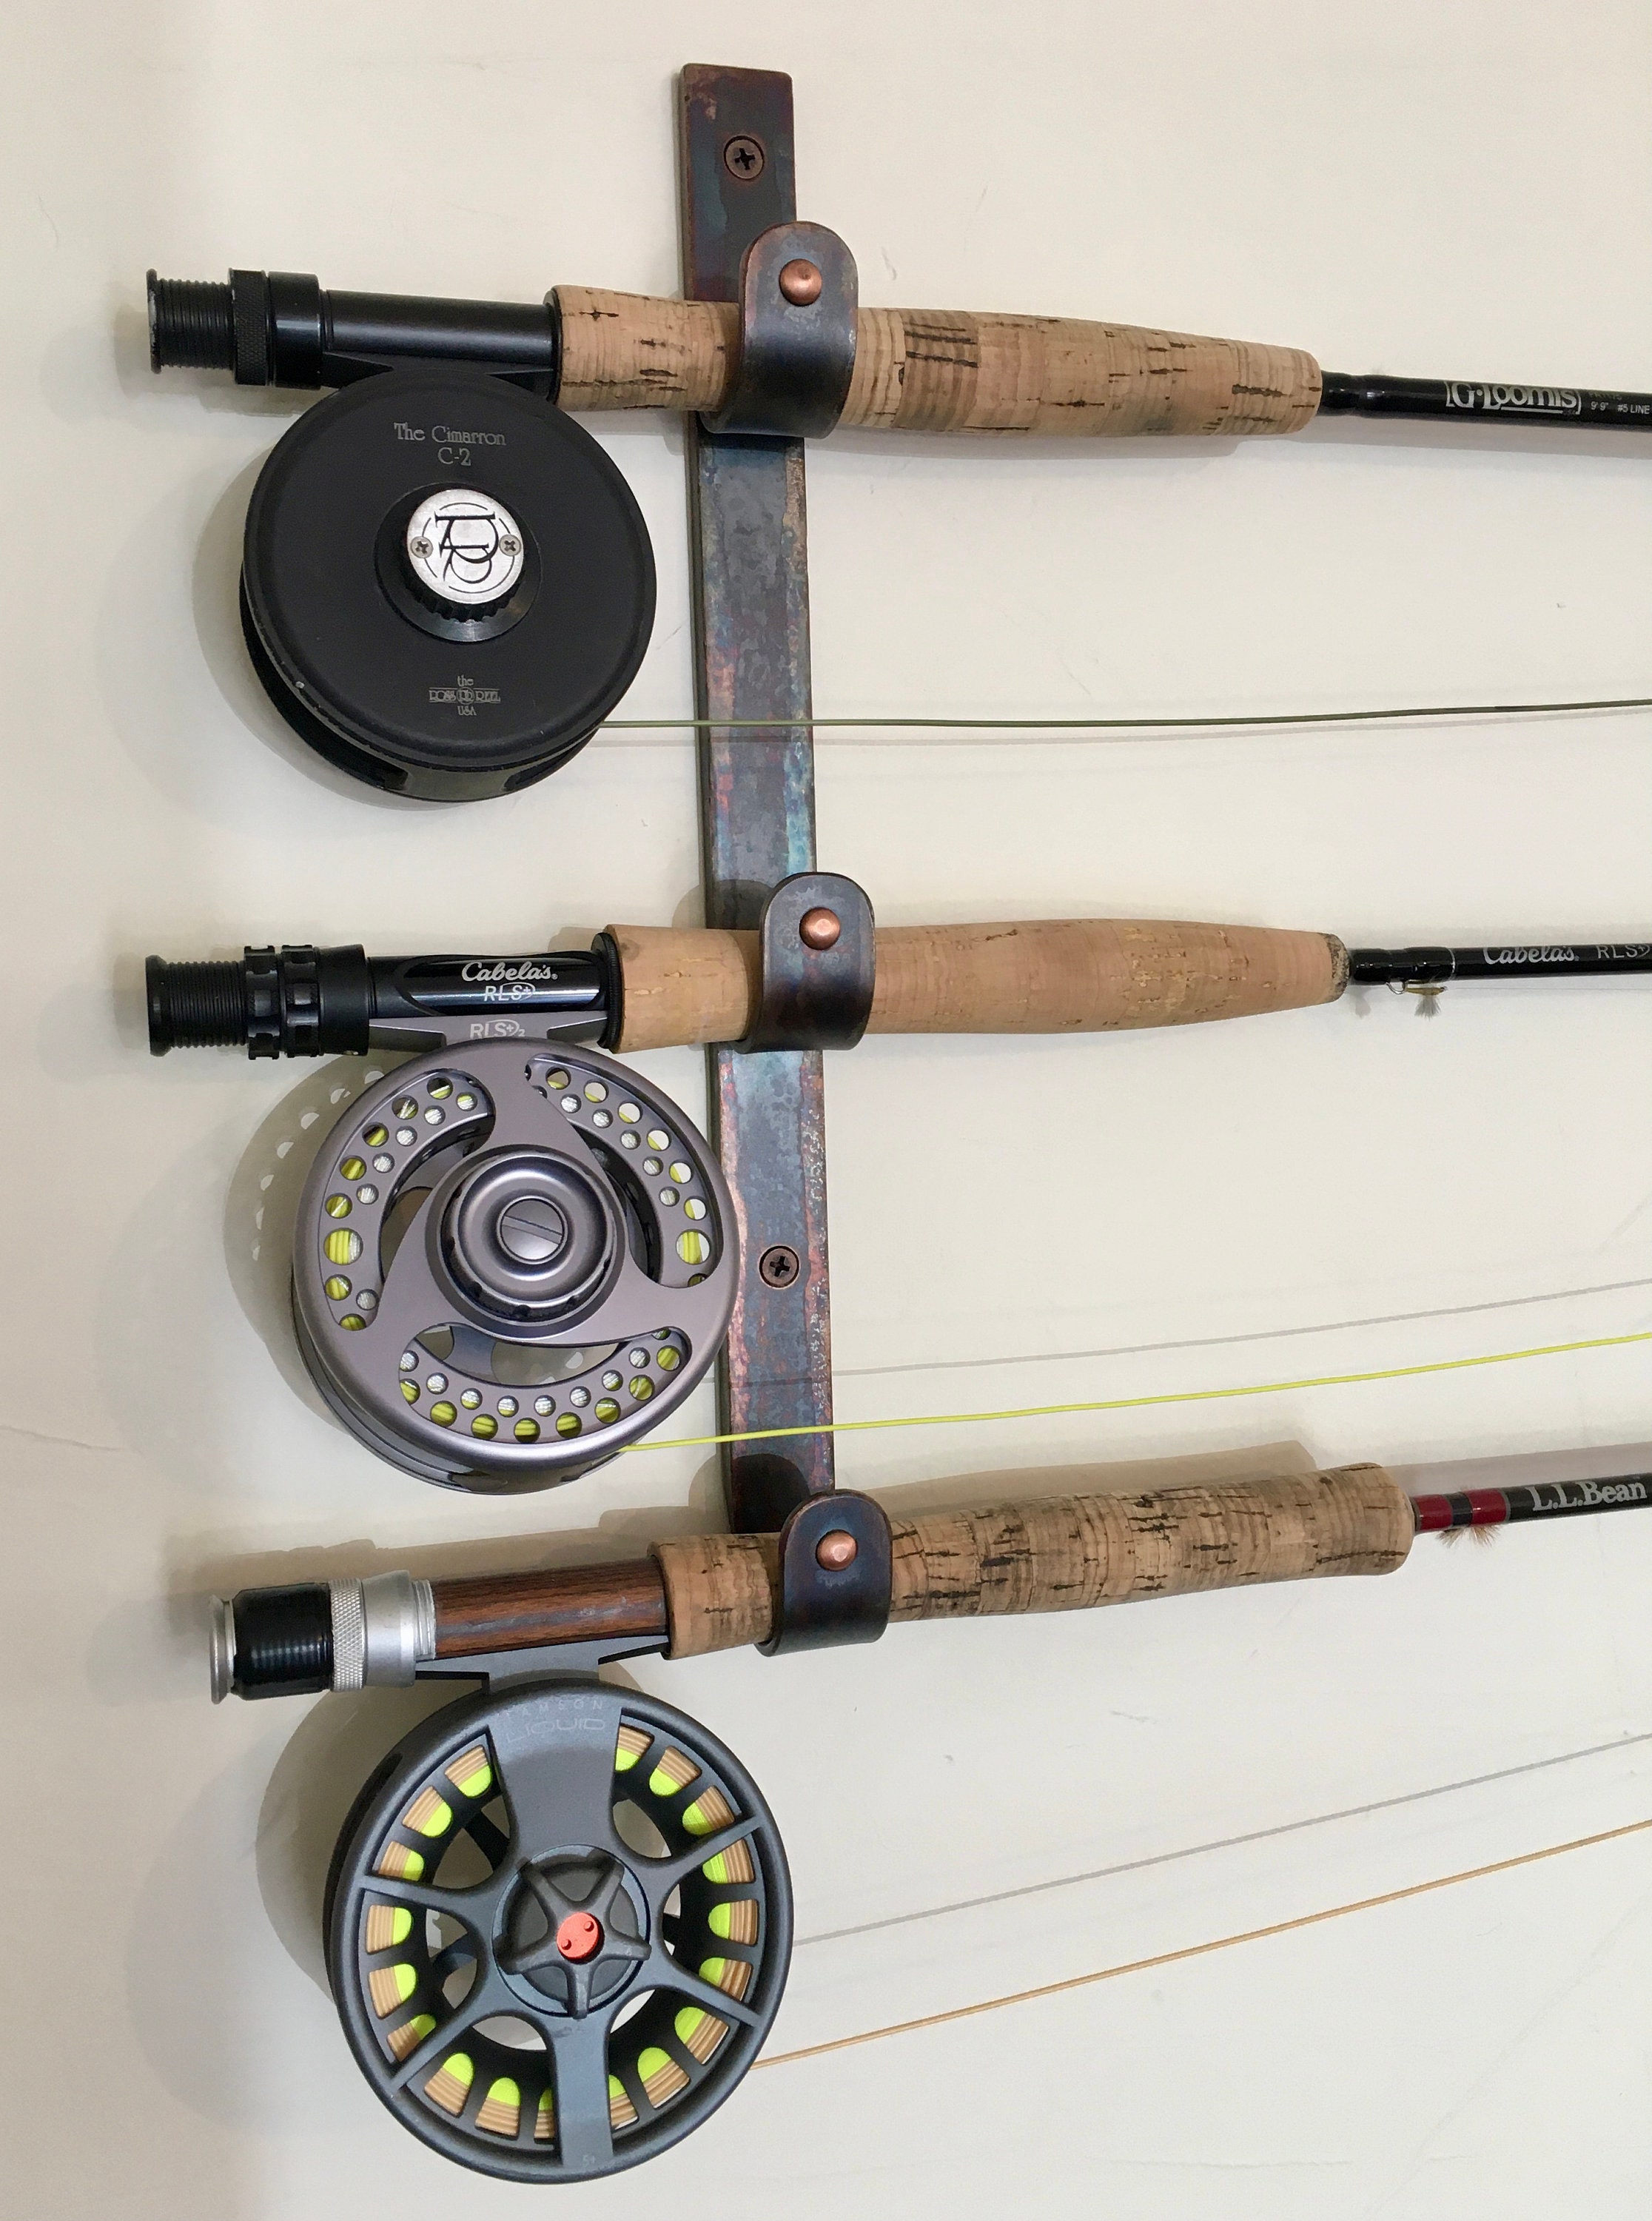 Fishing Rod Display 